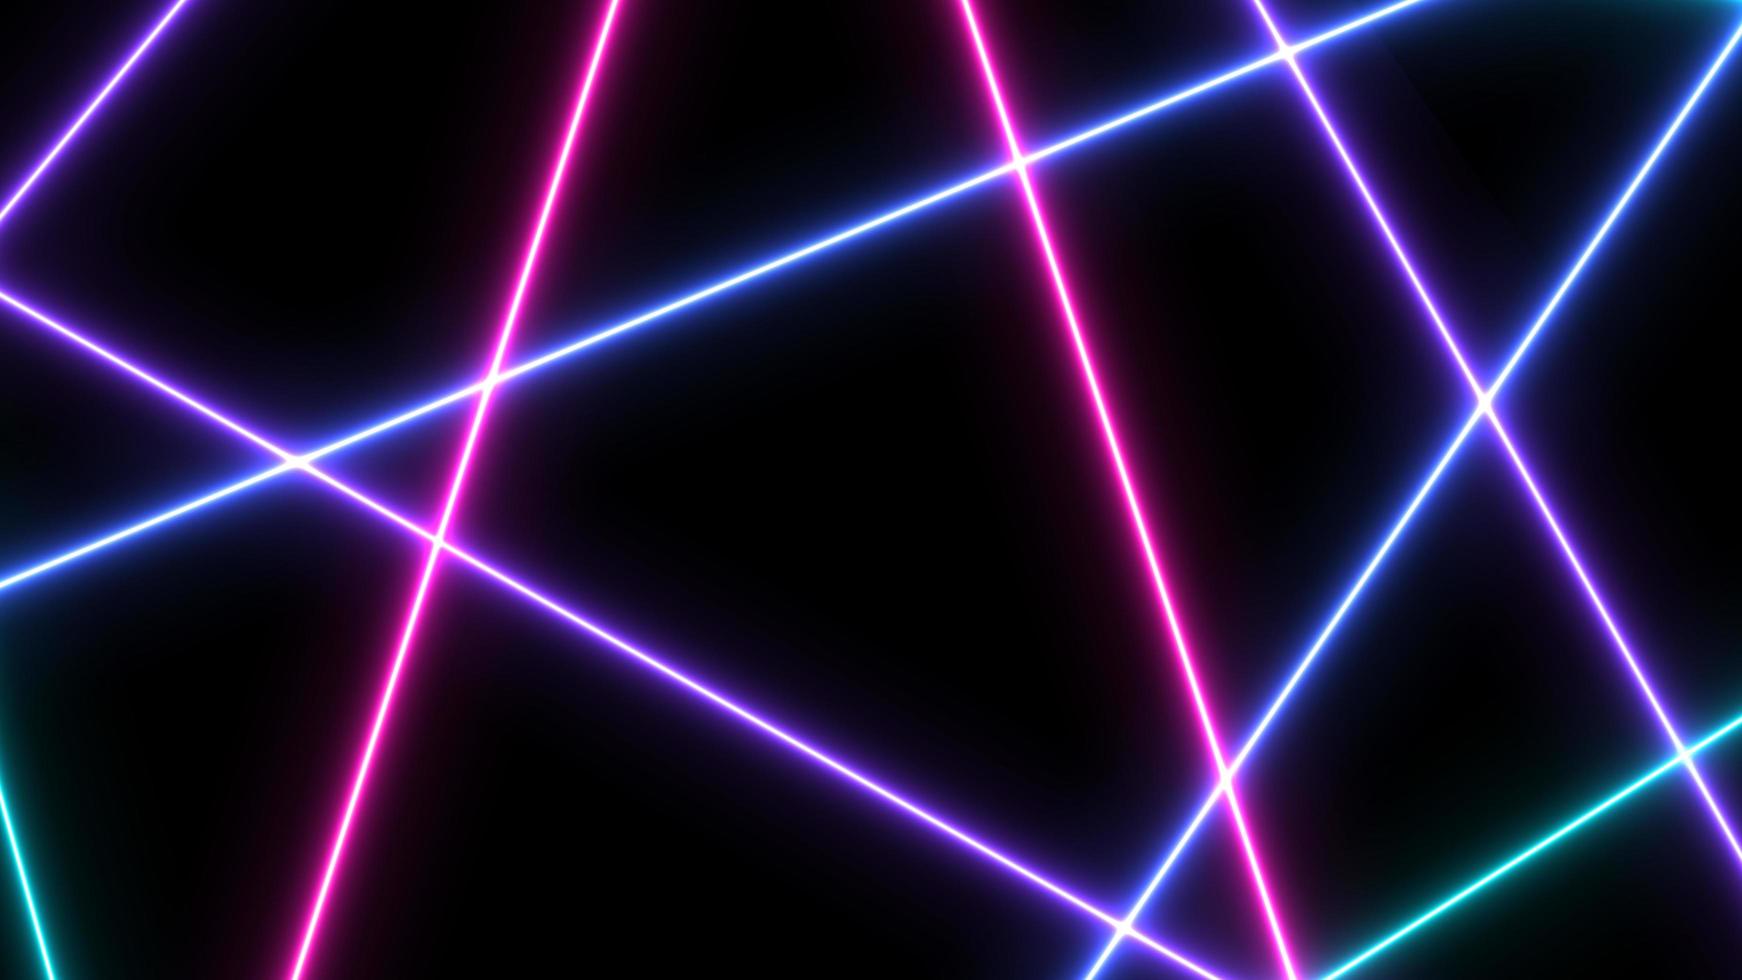 abstrato retro sci-fi neon brilhante lente flare colorido em fundo preto. laser show design colorido para tecnologias de publicidade de banners. estilo retro dos anos 80 foto